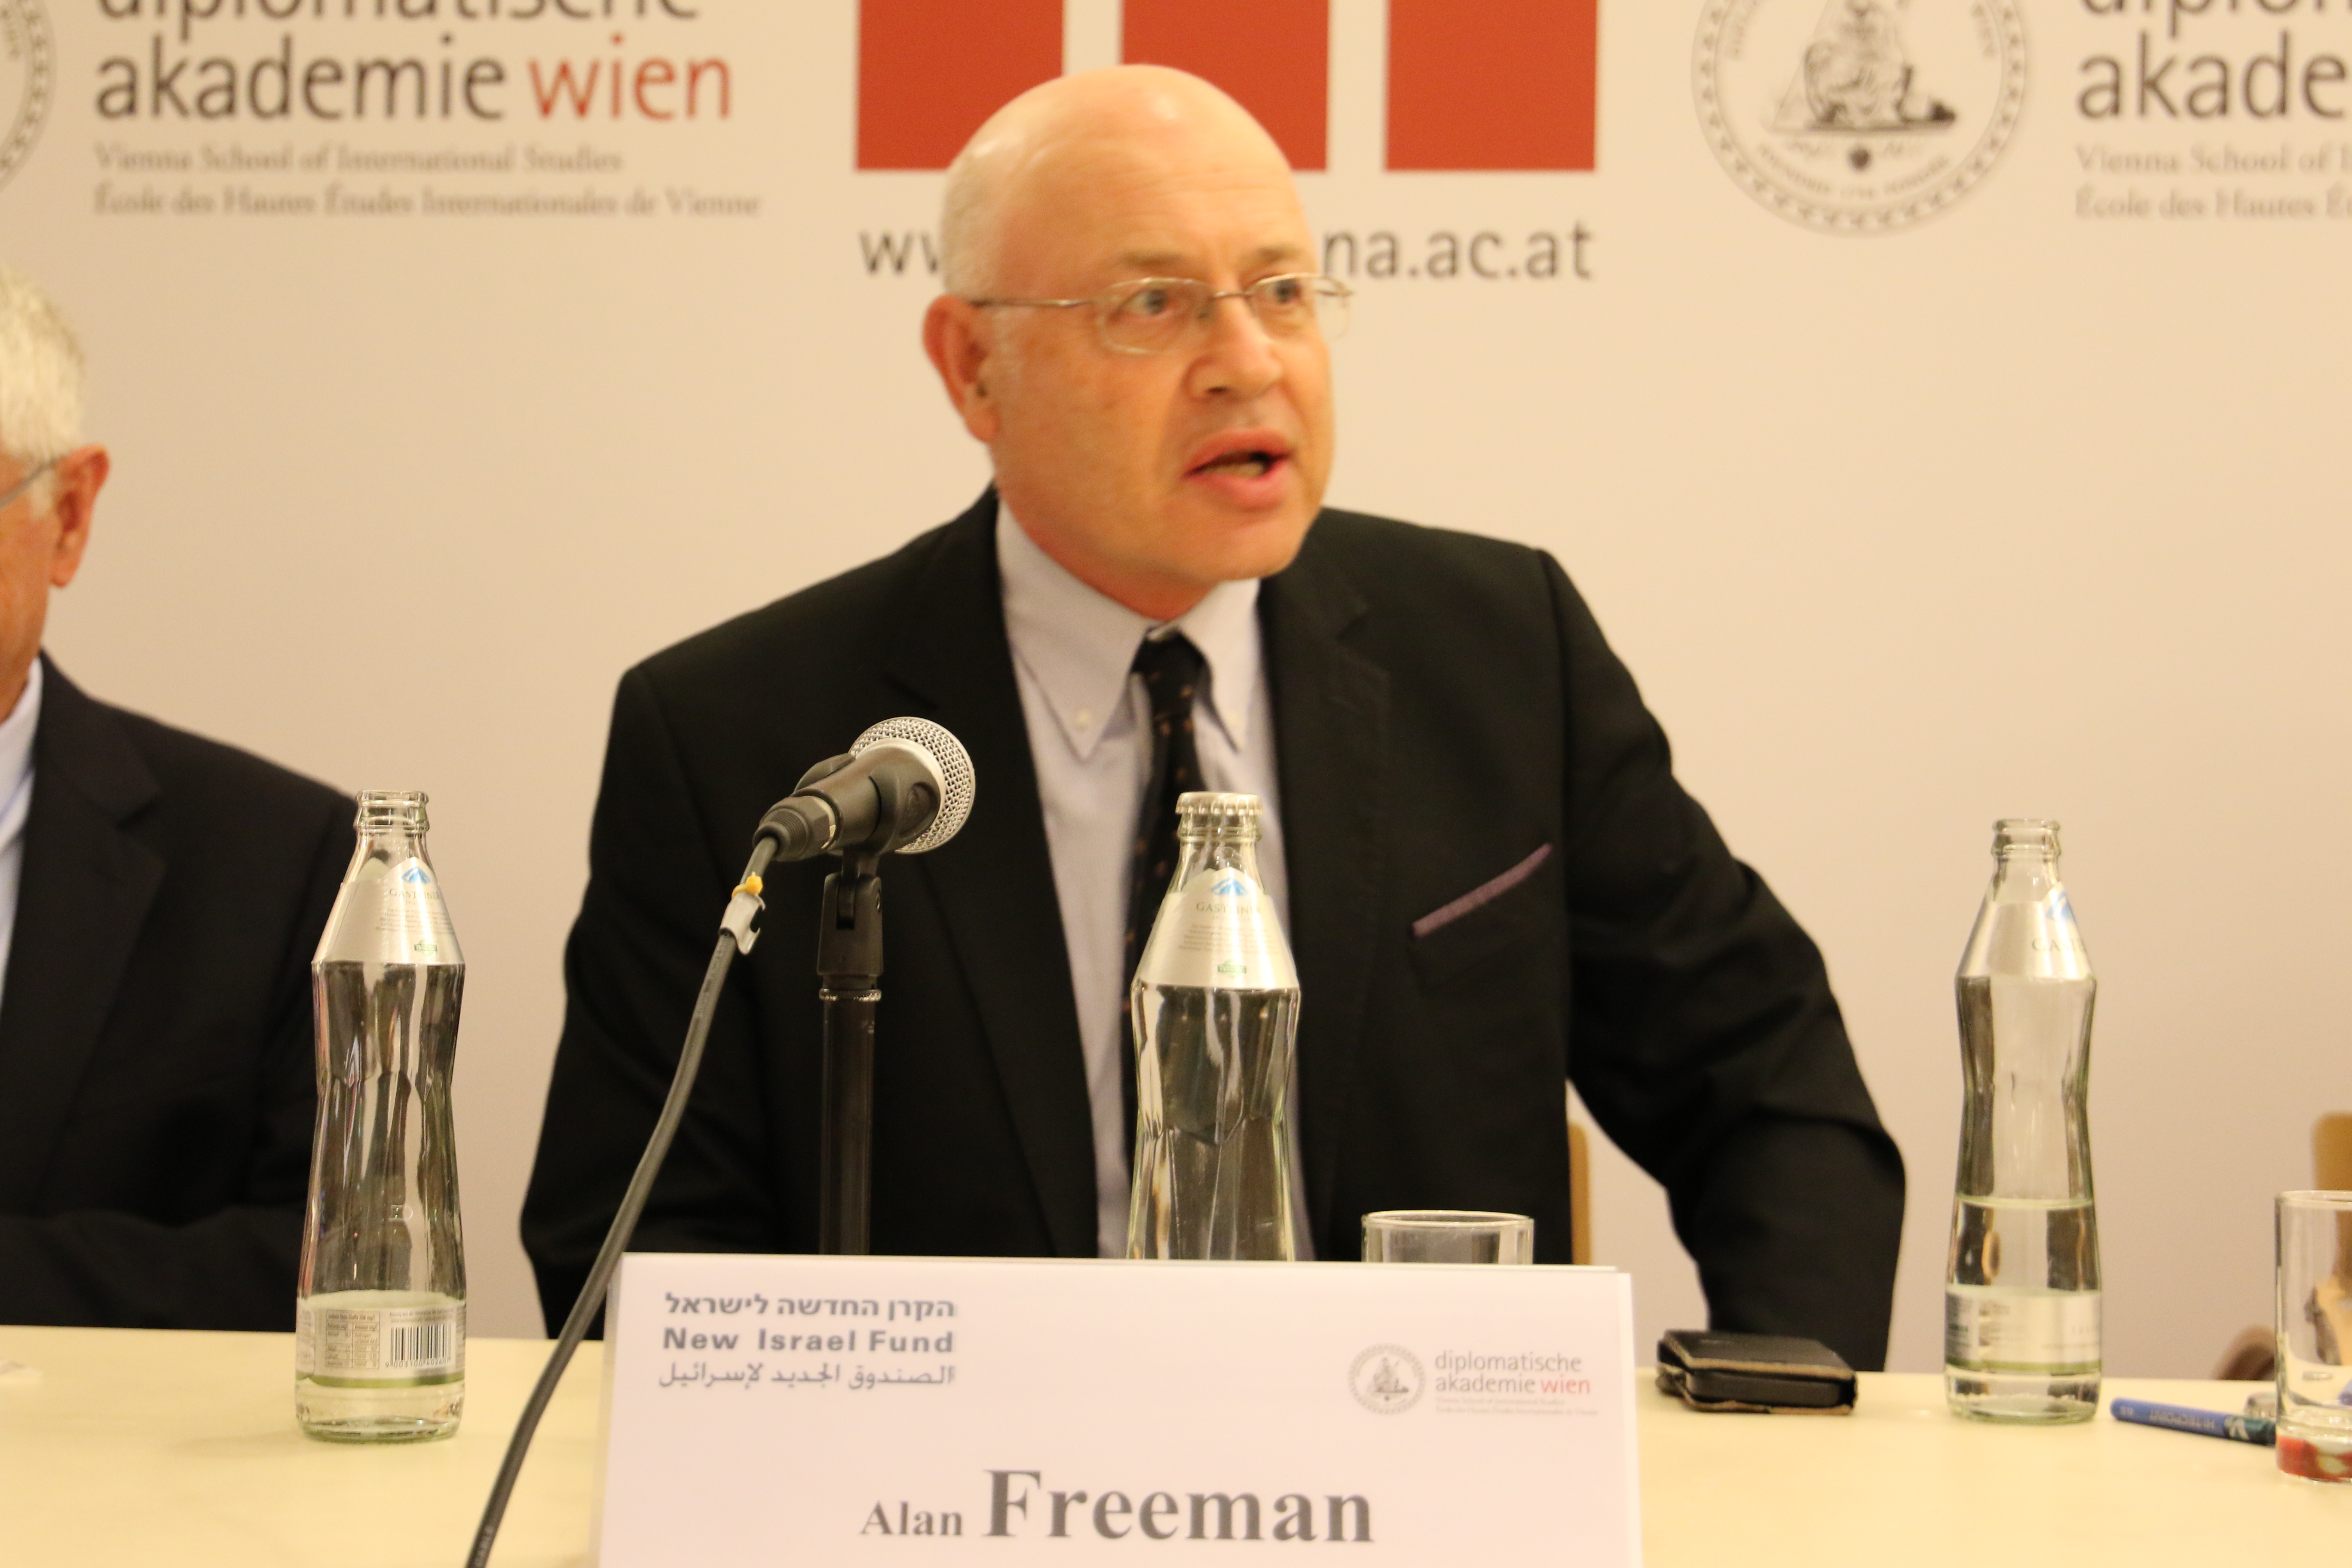 Alan Freeman, former Vice-President of The Jerusalem Foundation